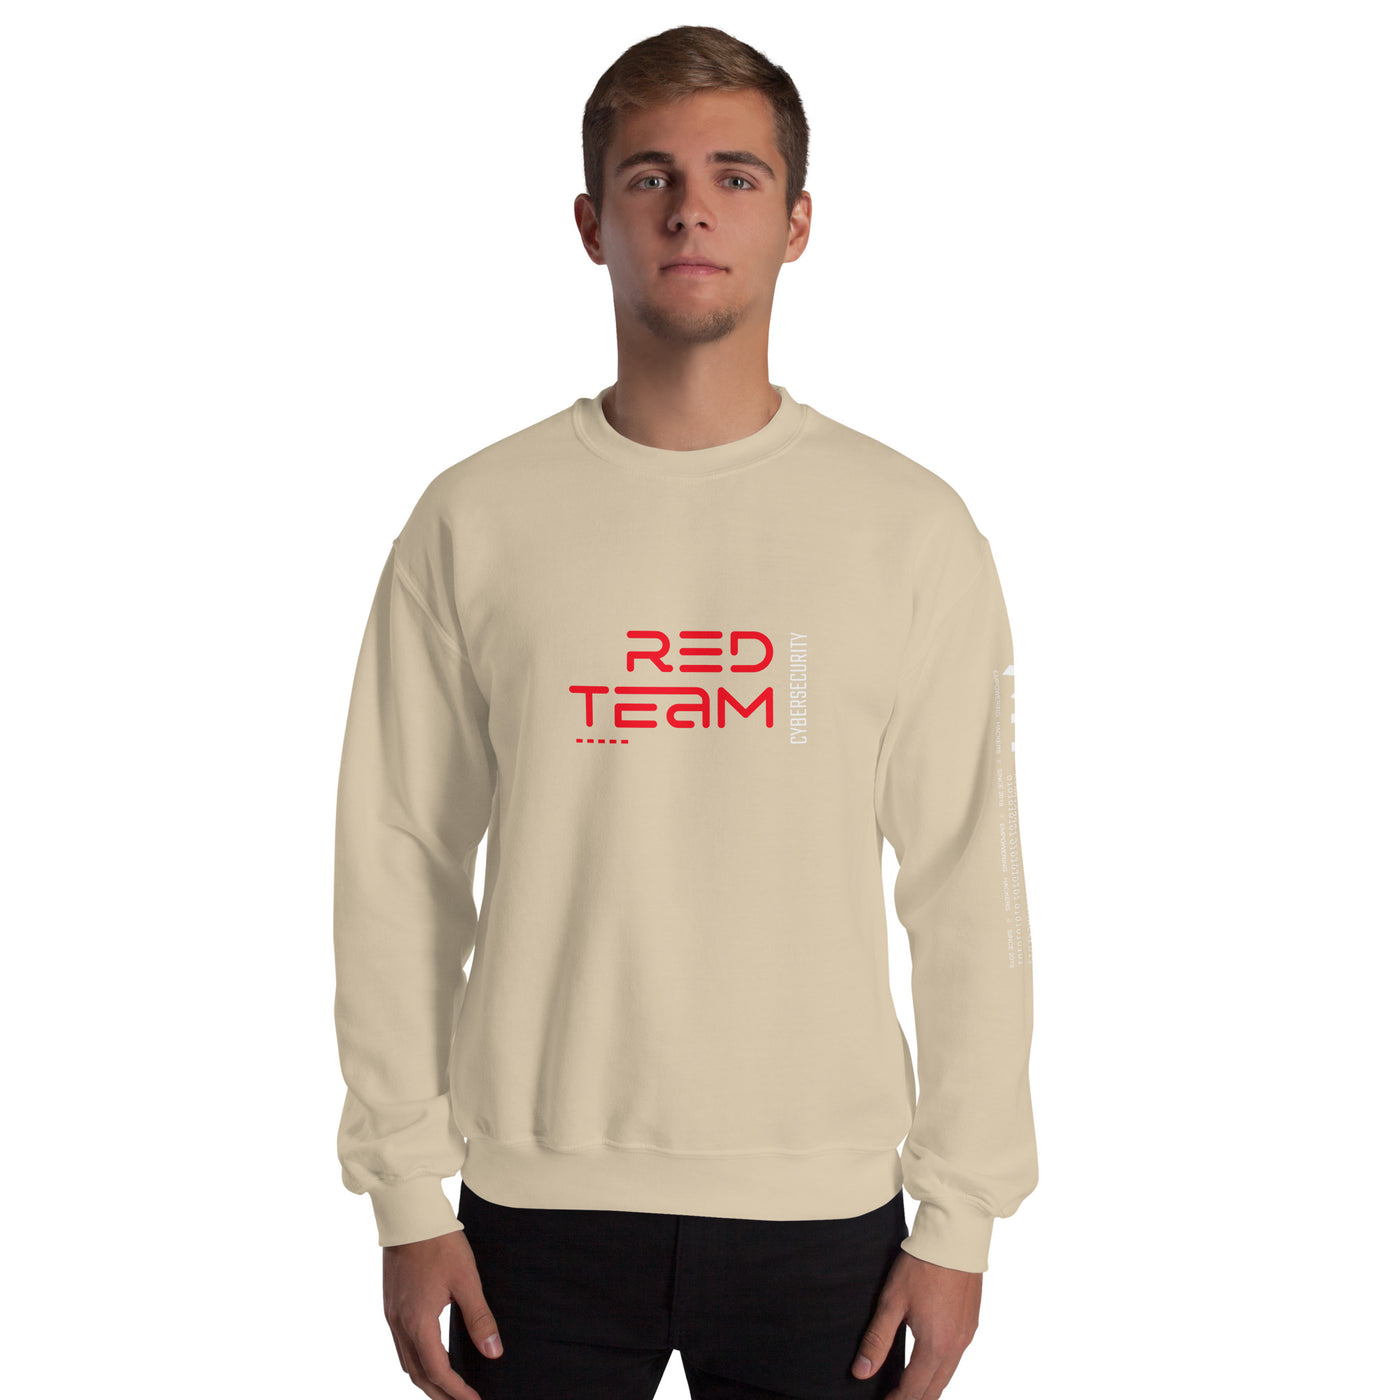 Cyber Security Red Team V11 - Unisex Sweatshirt